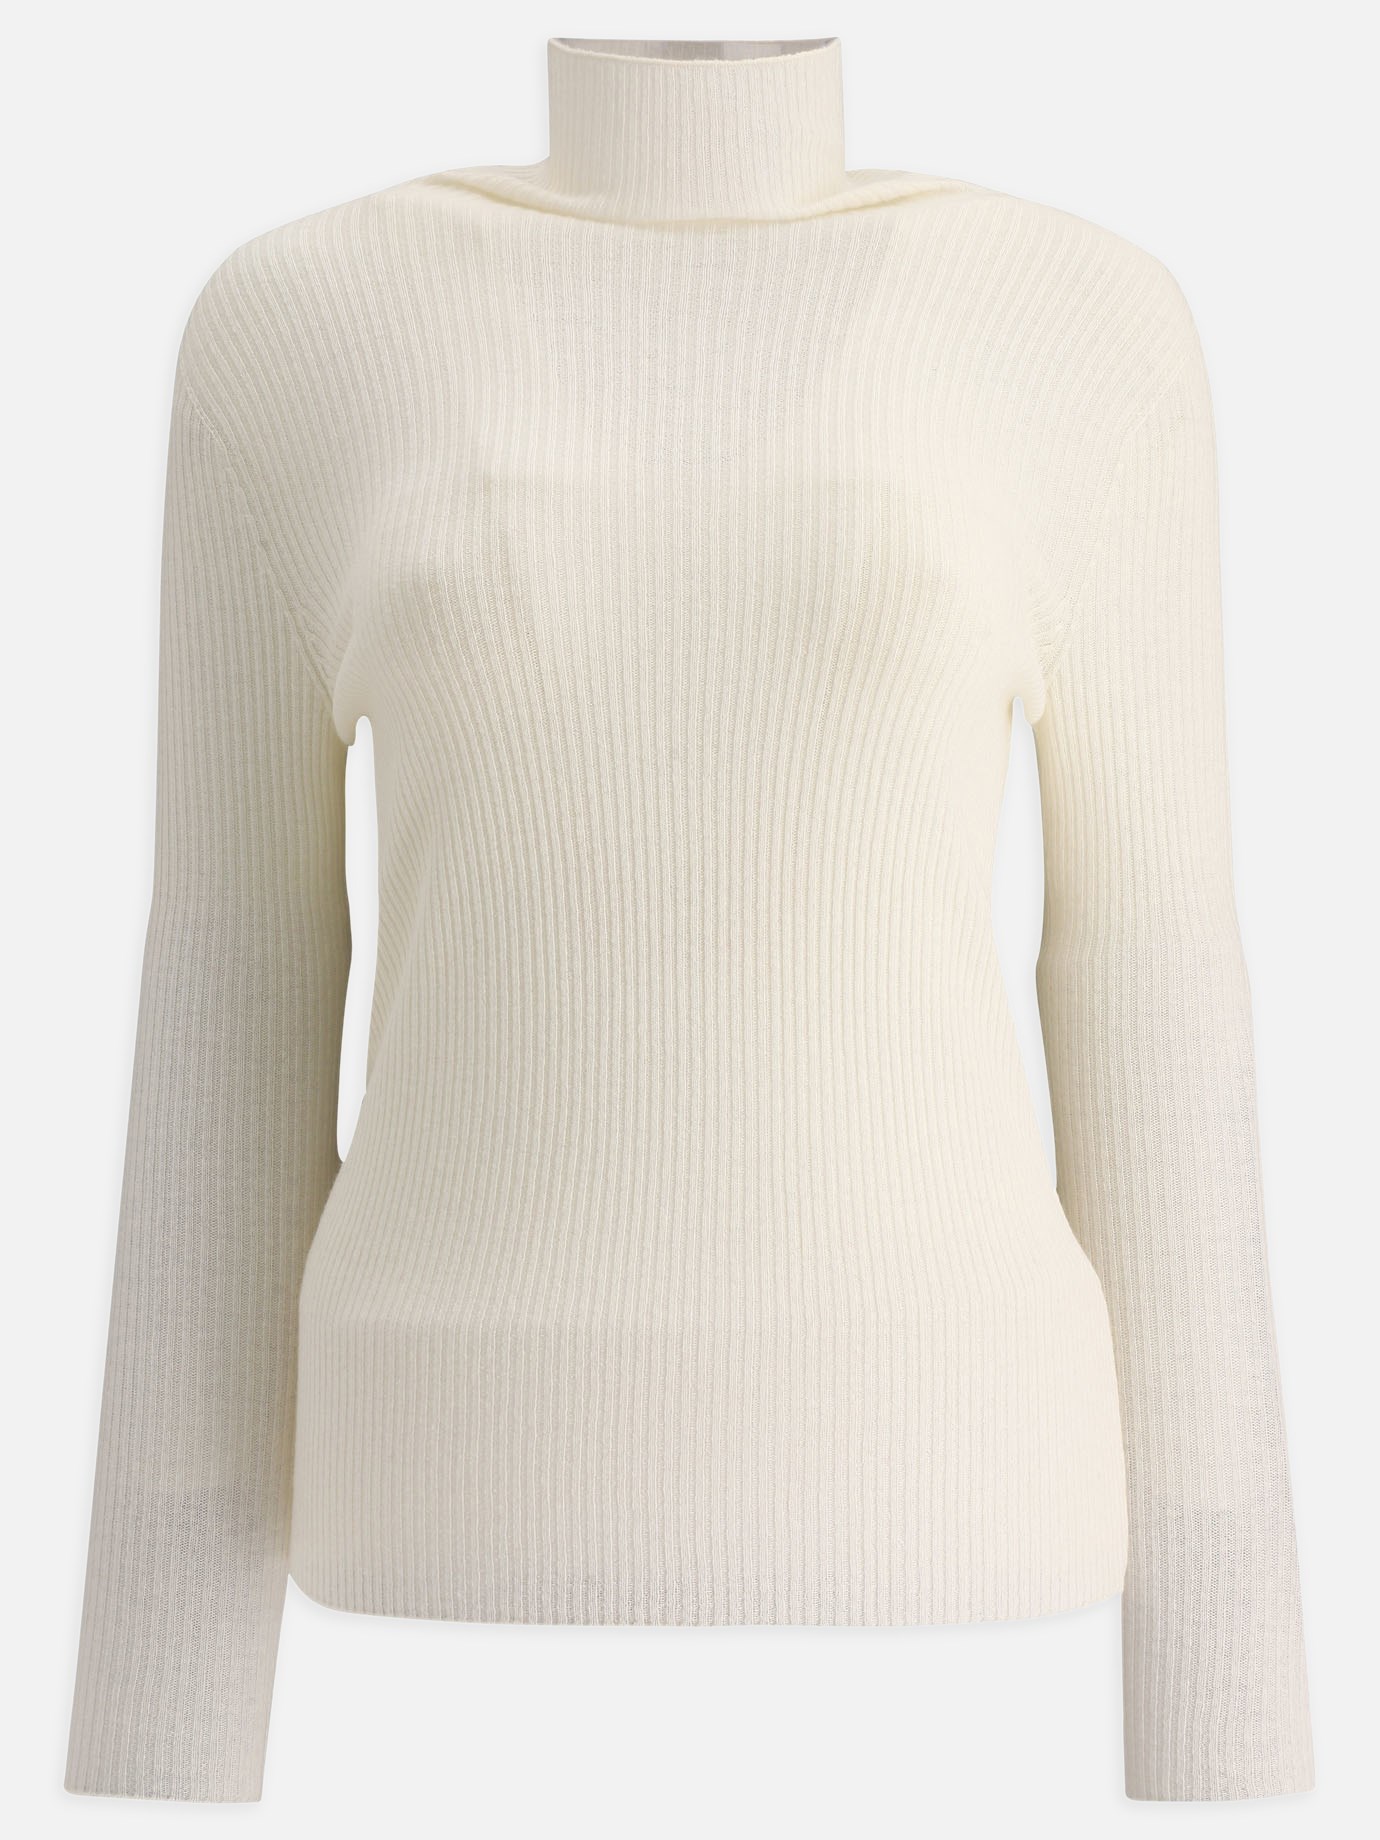 Ribbed turtleneck sweaterby Fabiana Filippi - 3